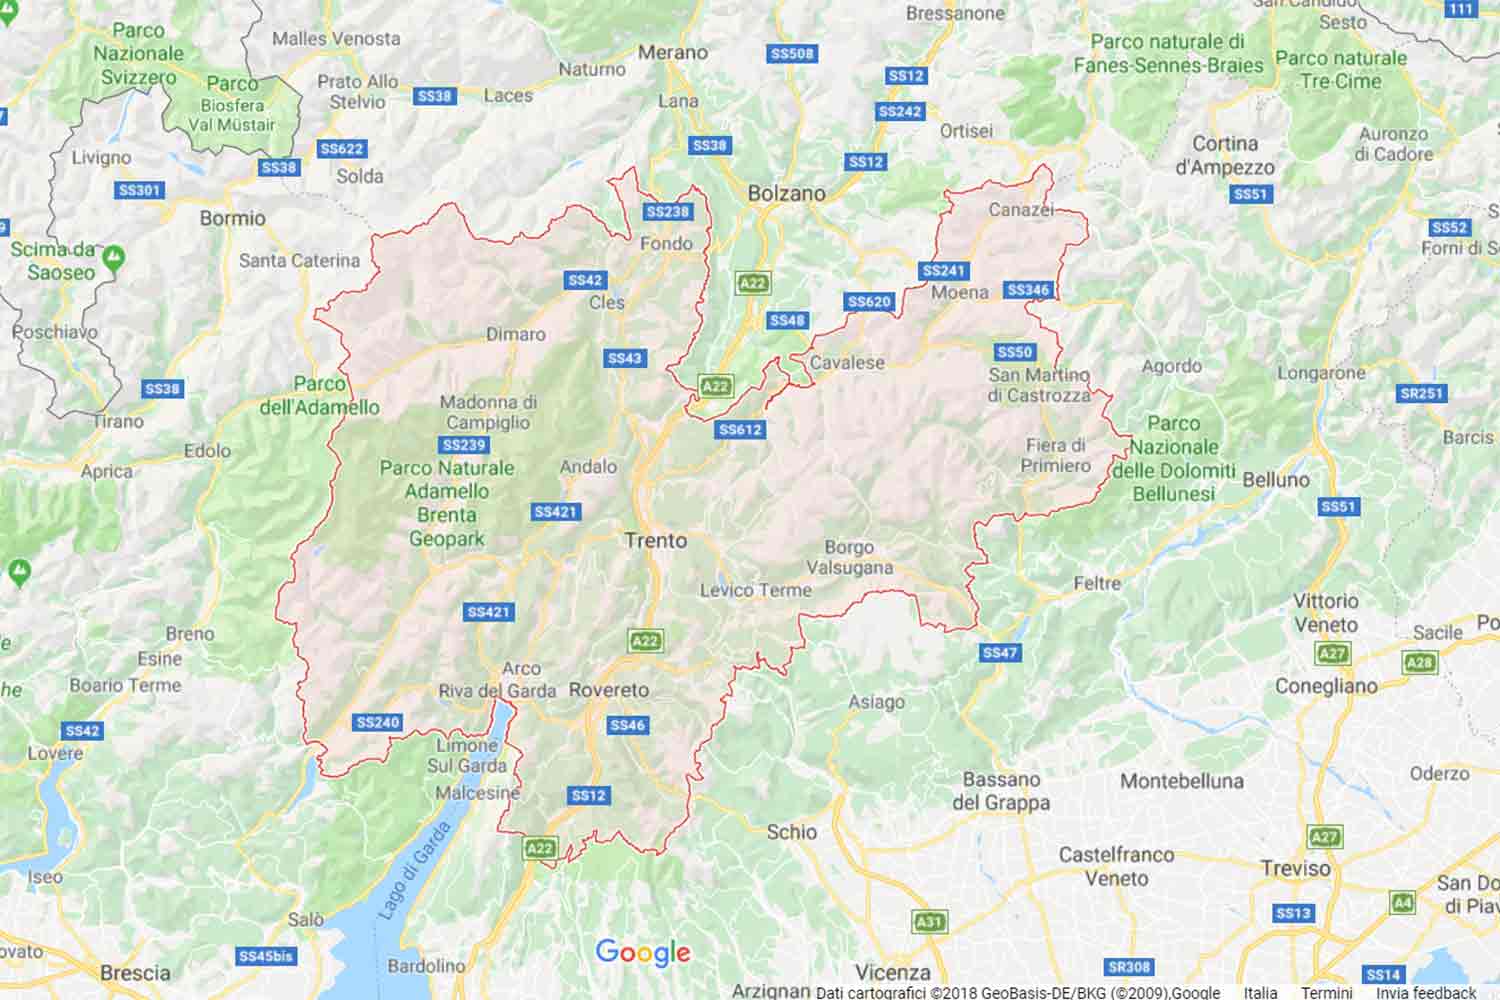 Trentino - Trento - Capriana Preventivi Veloci google maps